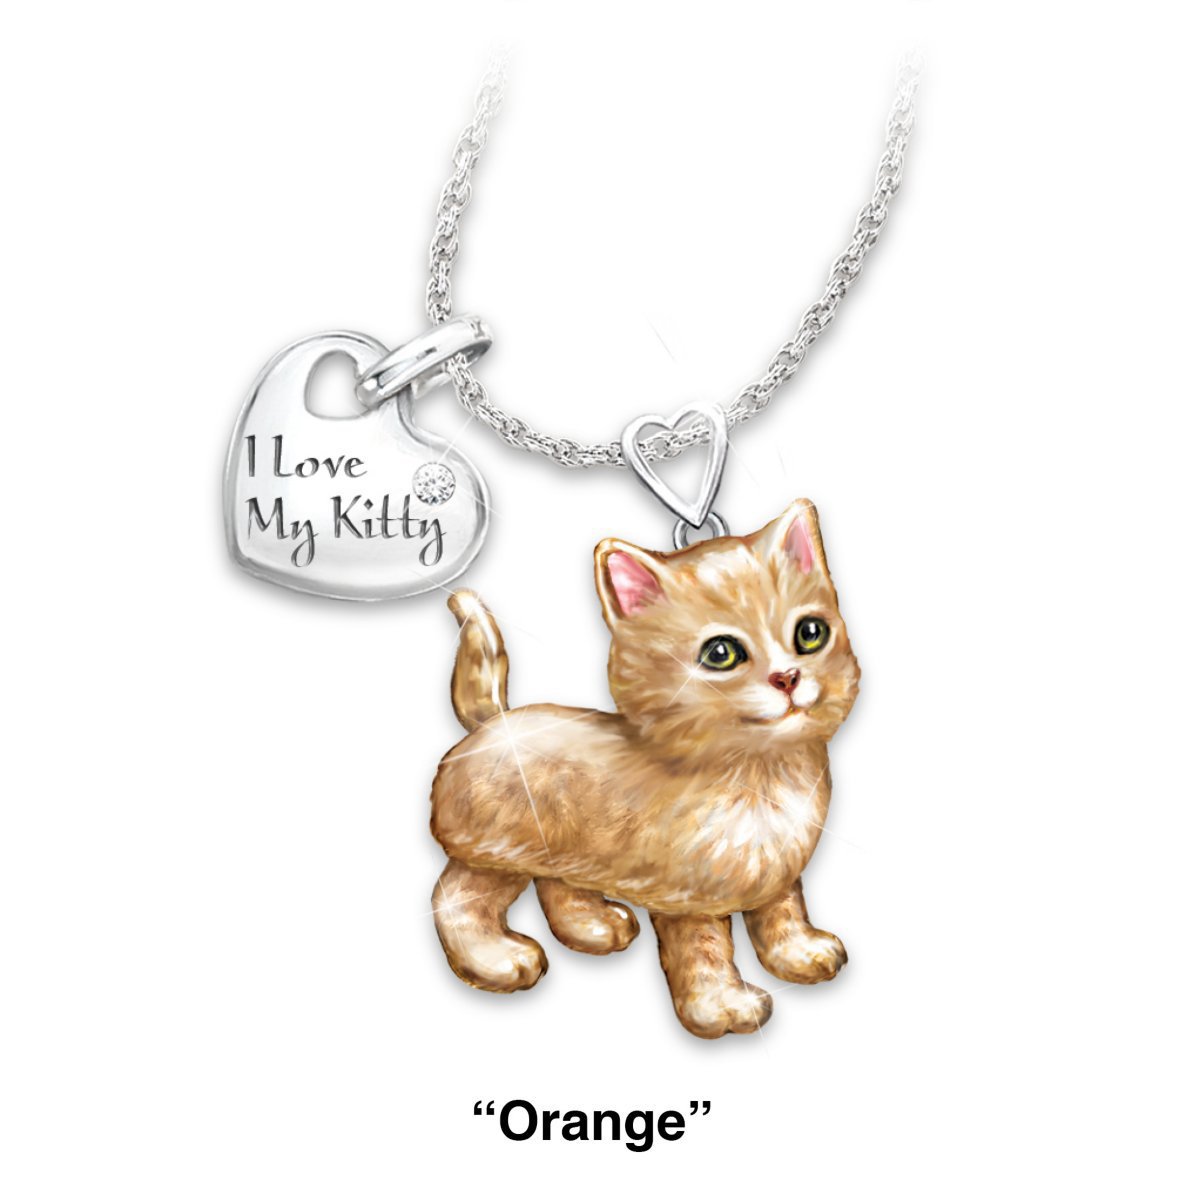 I Love My Kitten Cat Pendant Necklace